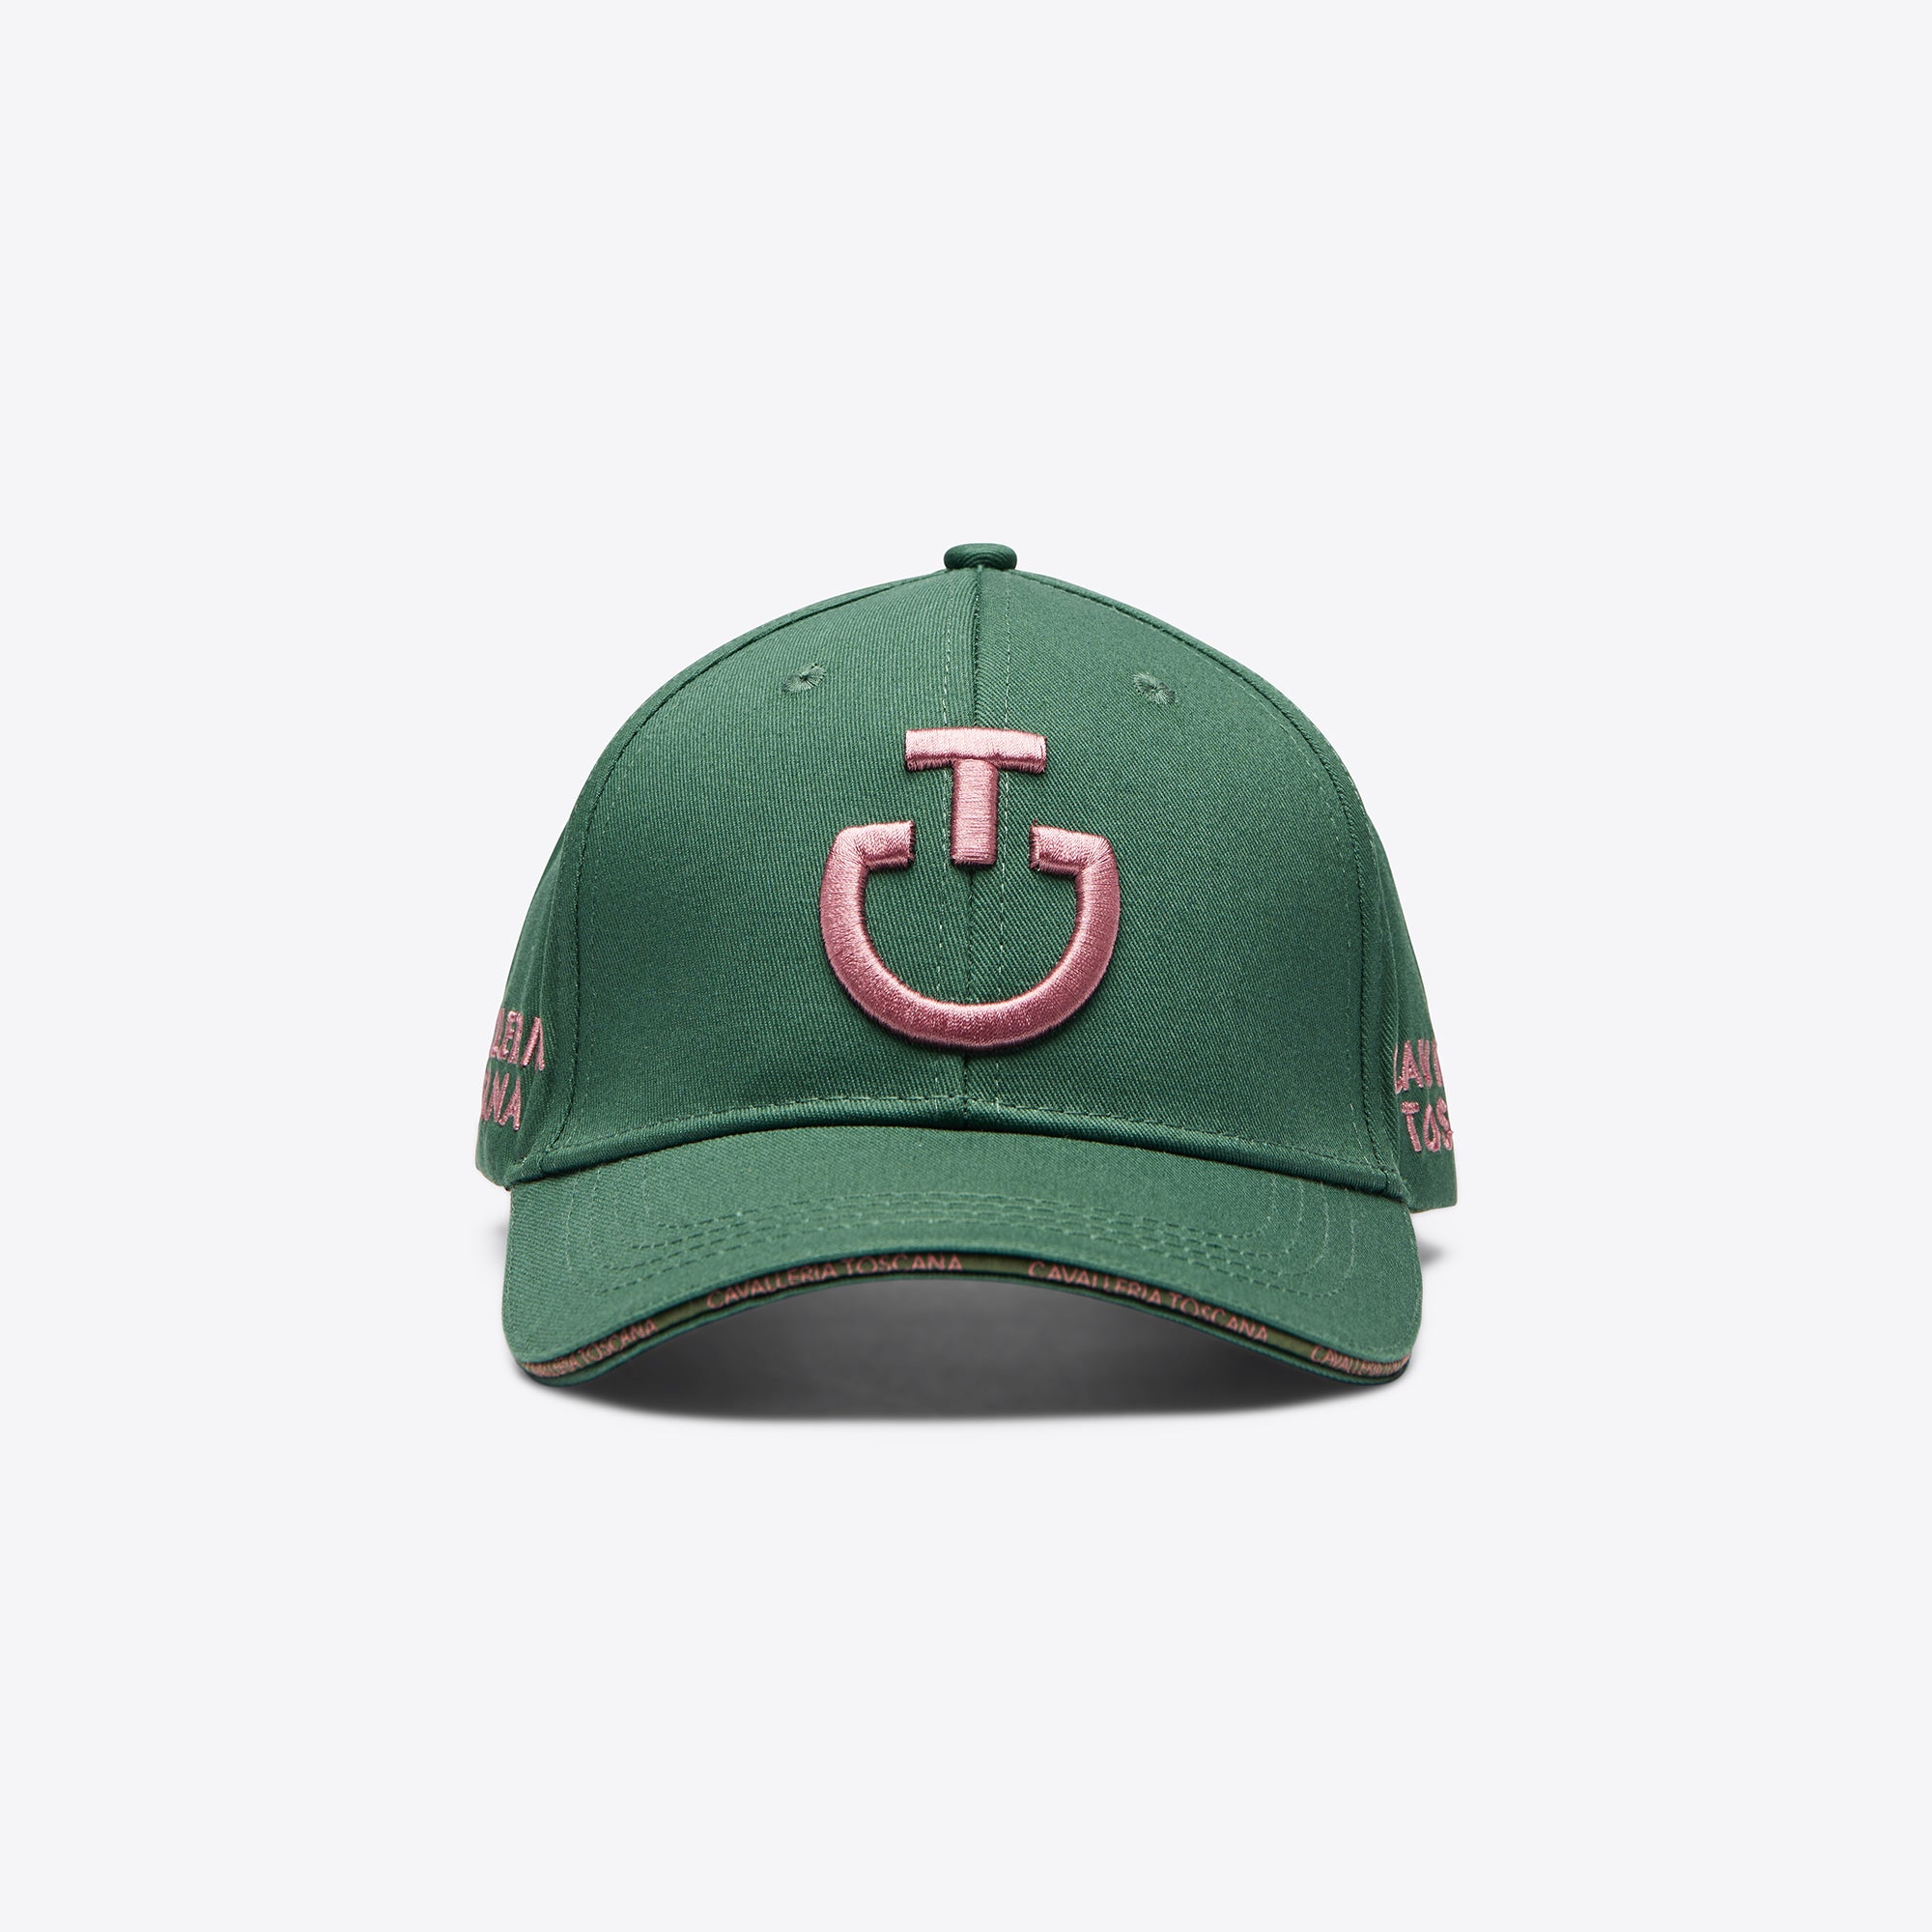 CT Cotton Cap - Green/Pink